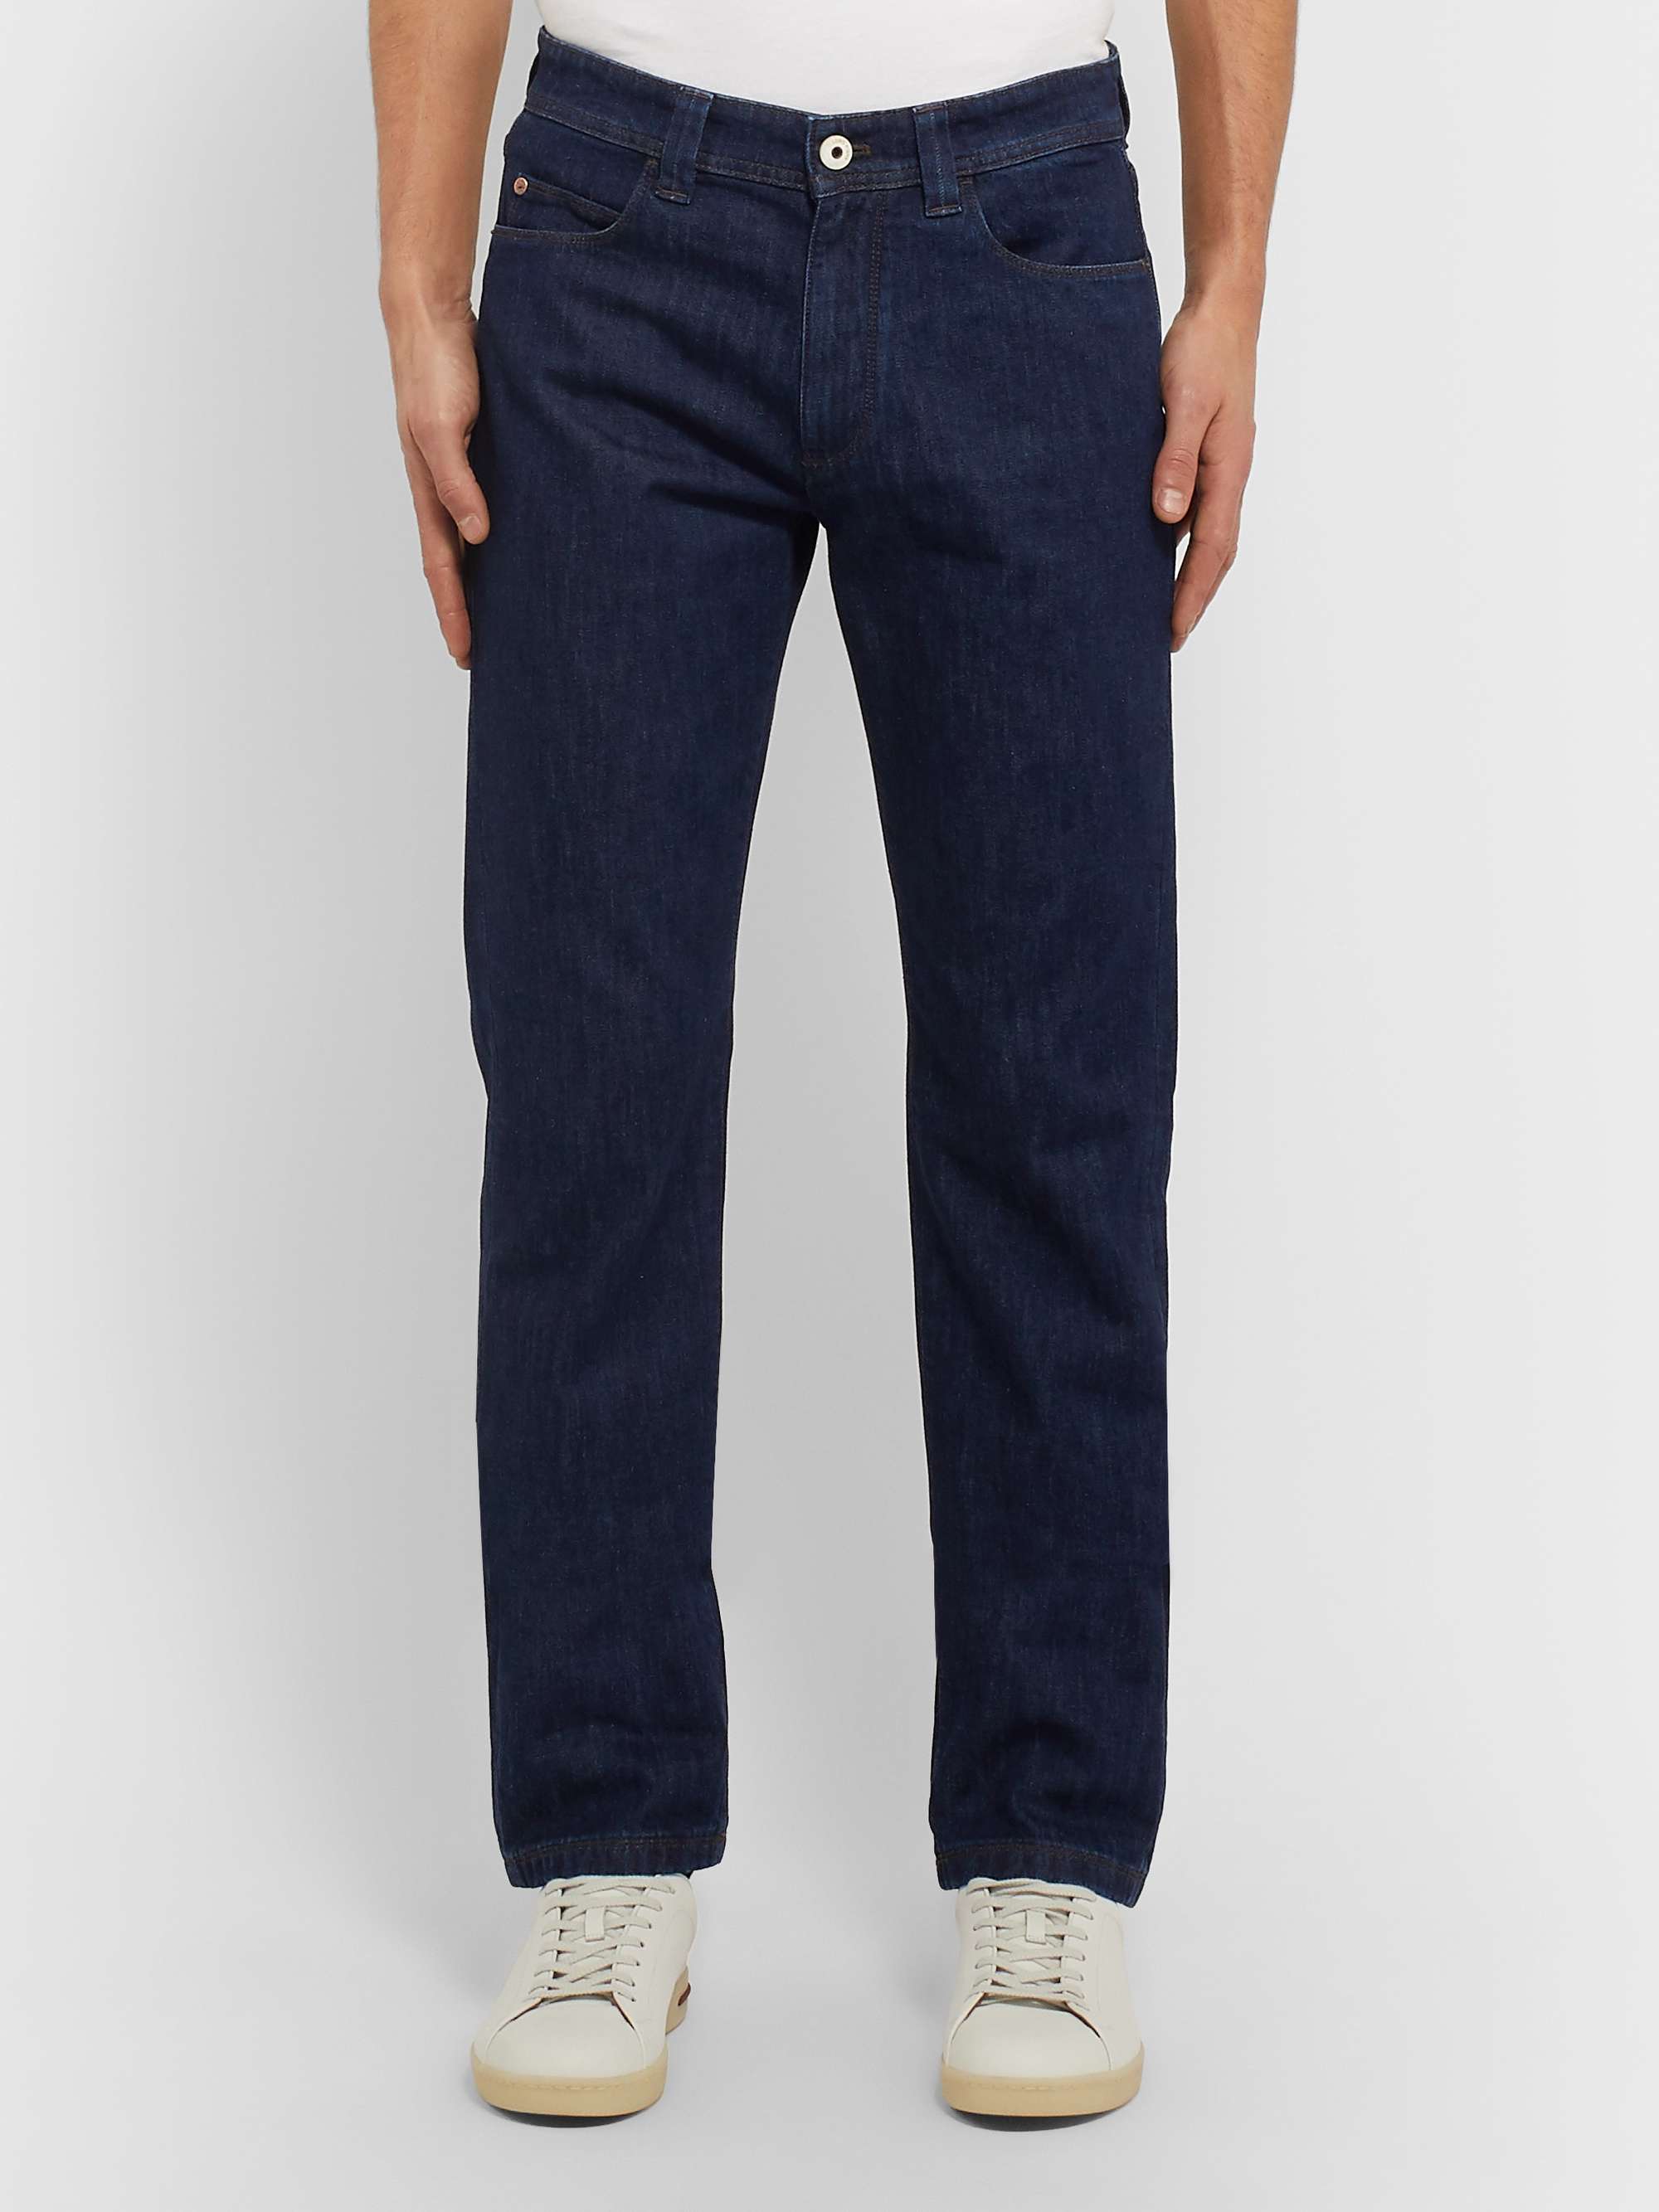 LORO PIANA Slim-Fit Denim Jeans | MR PORTER